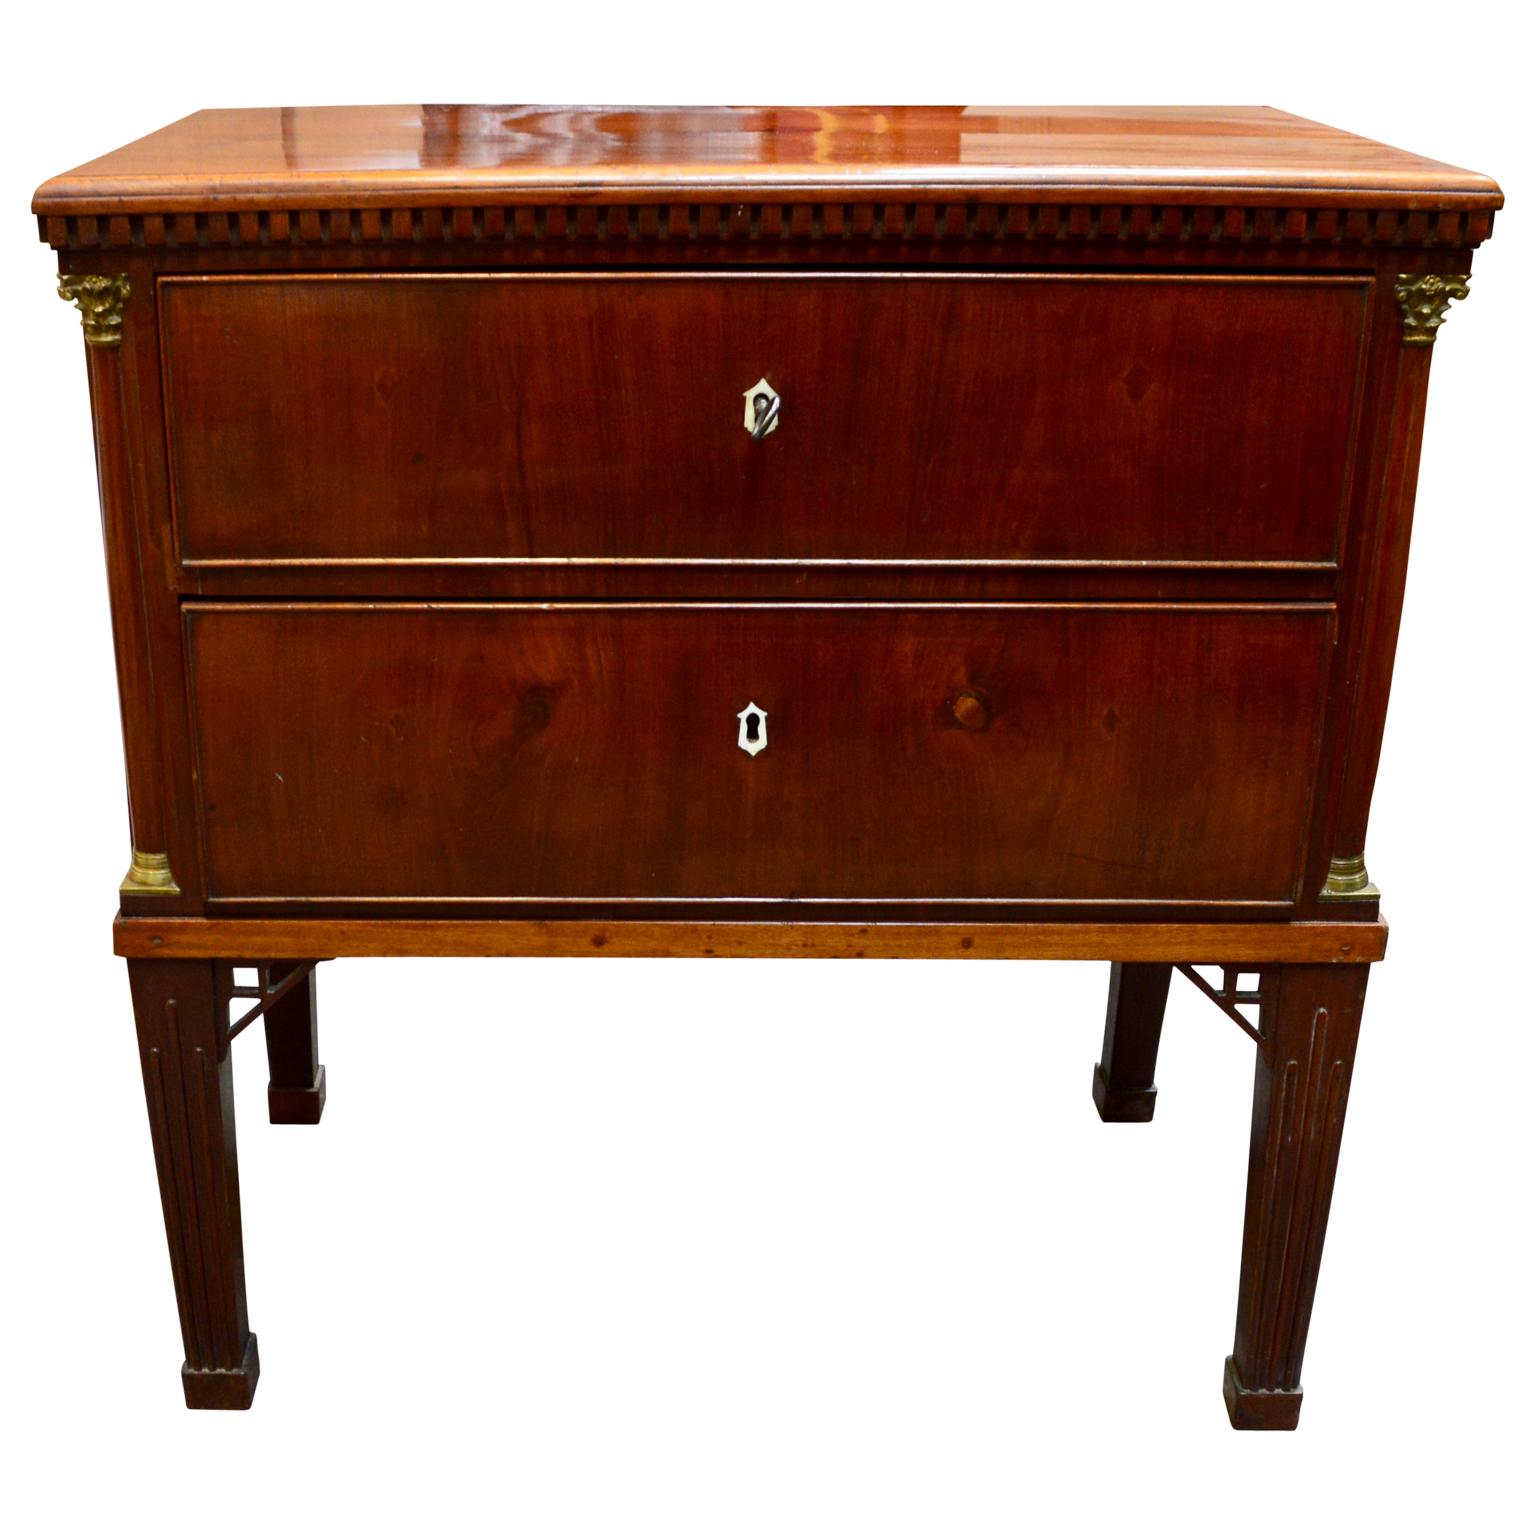 Small Altona Biedermeier mahogany dresser with 2 drawers. Brass fittings on the sides and bone keyhole fittings.
